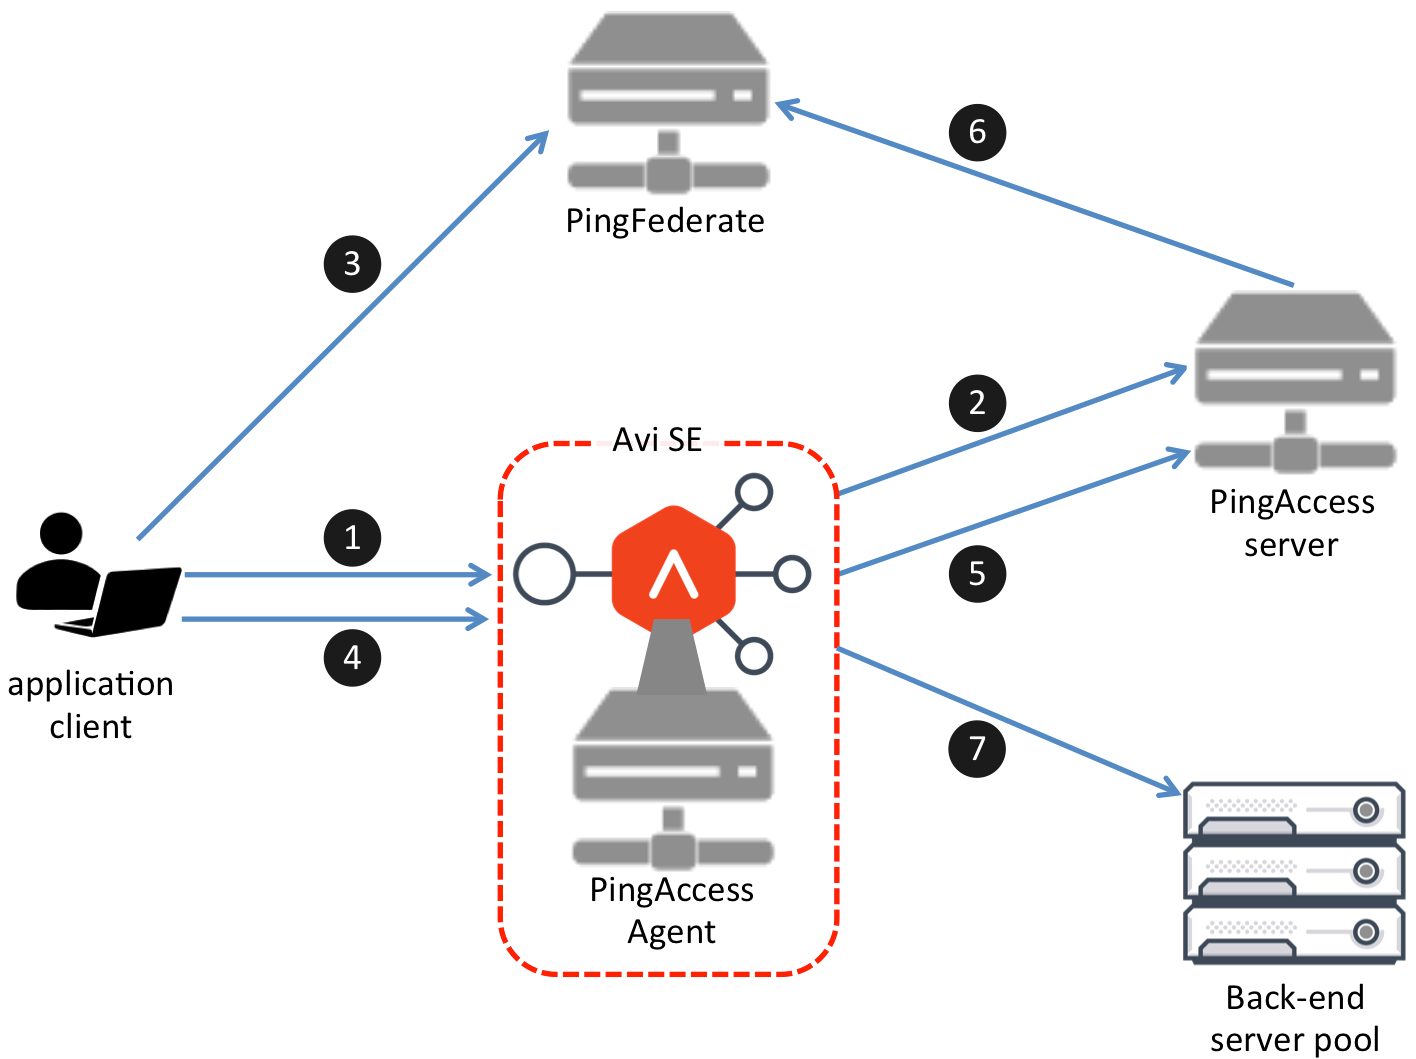 How PingAccess agent, PingAccess server, and PingFederate work with the Avi SE